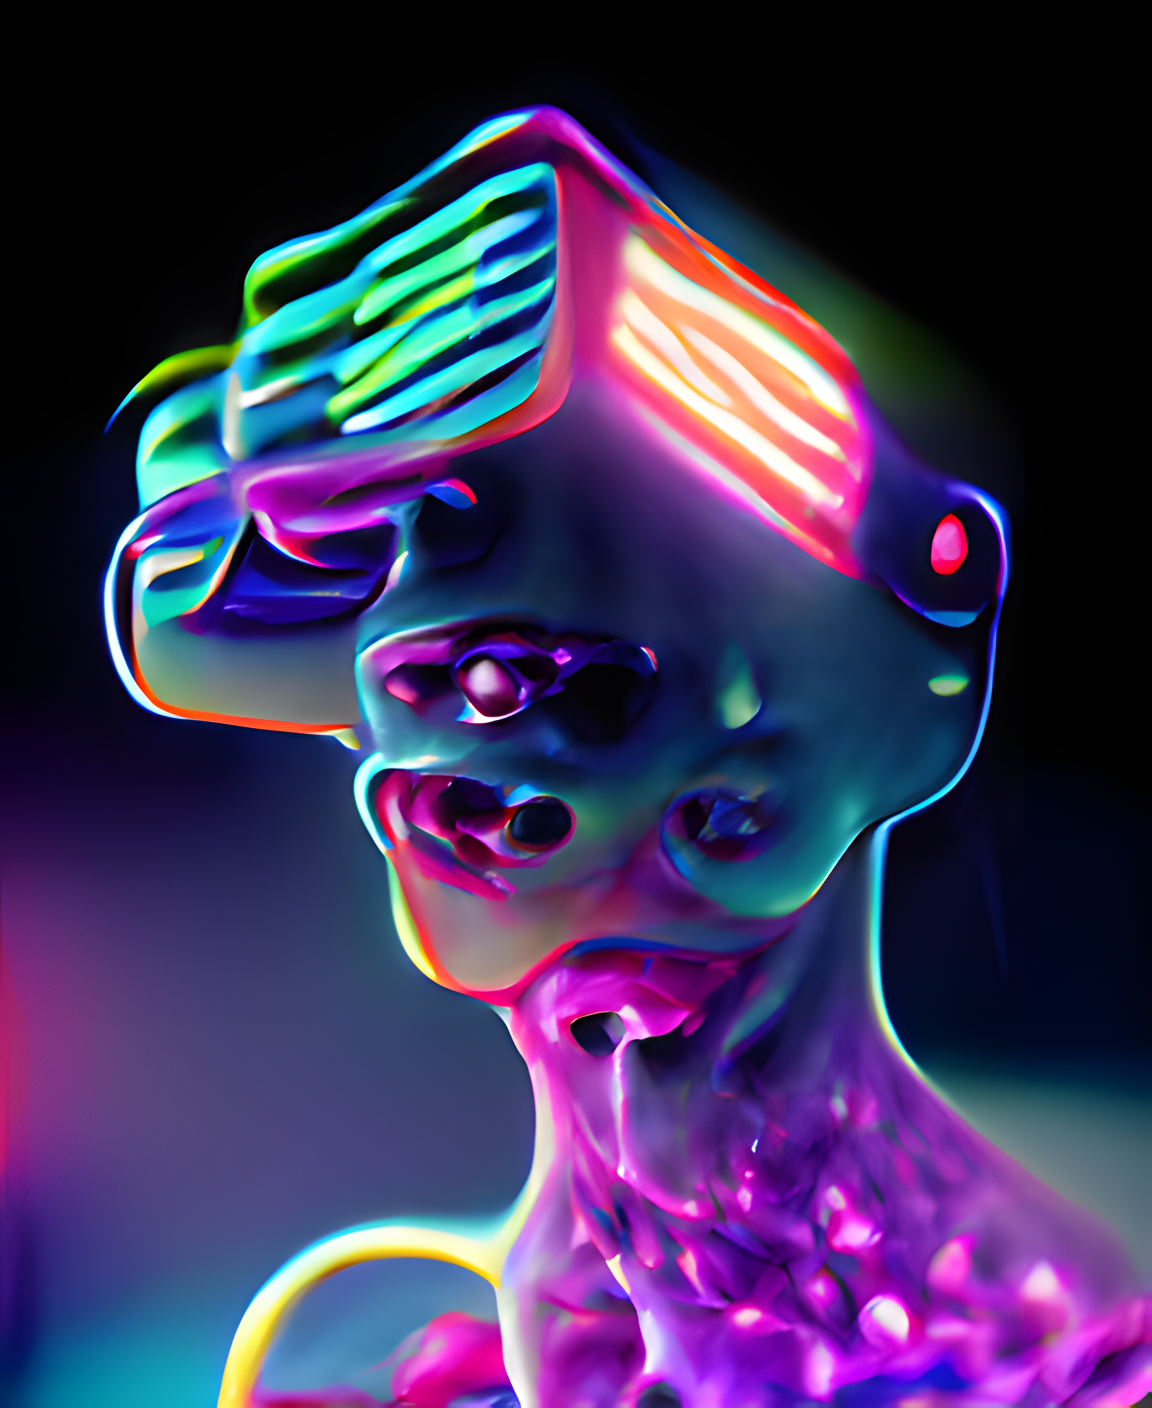 VR Cyber Radiated Human